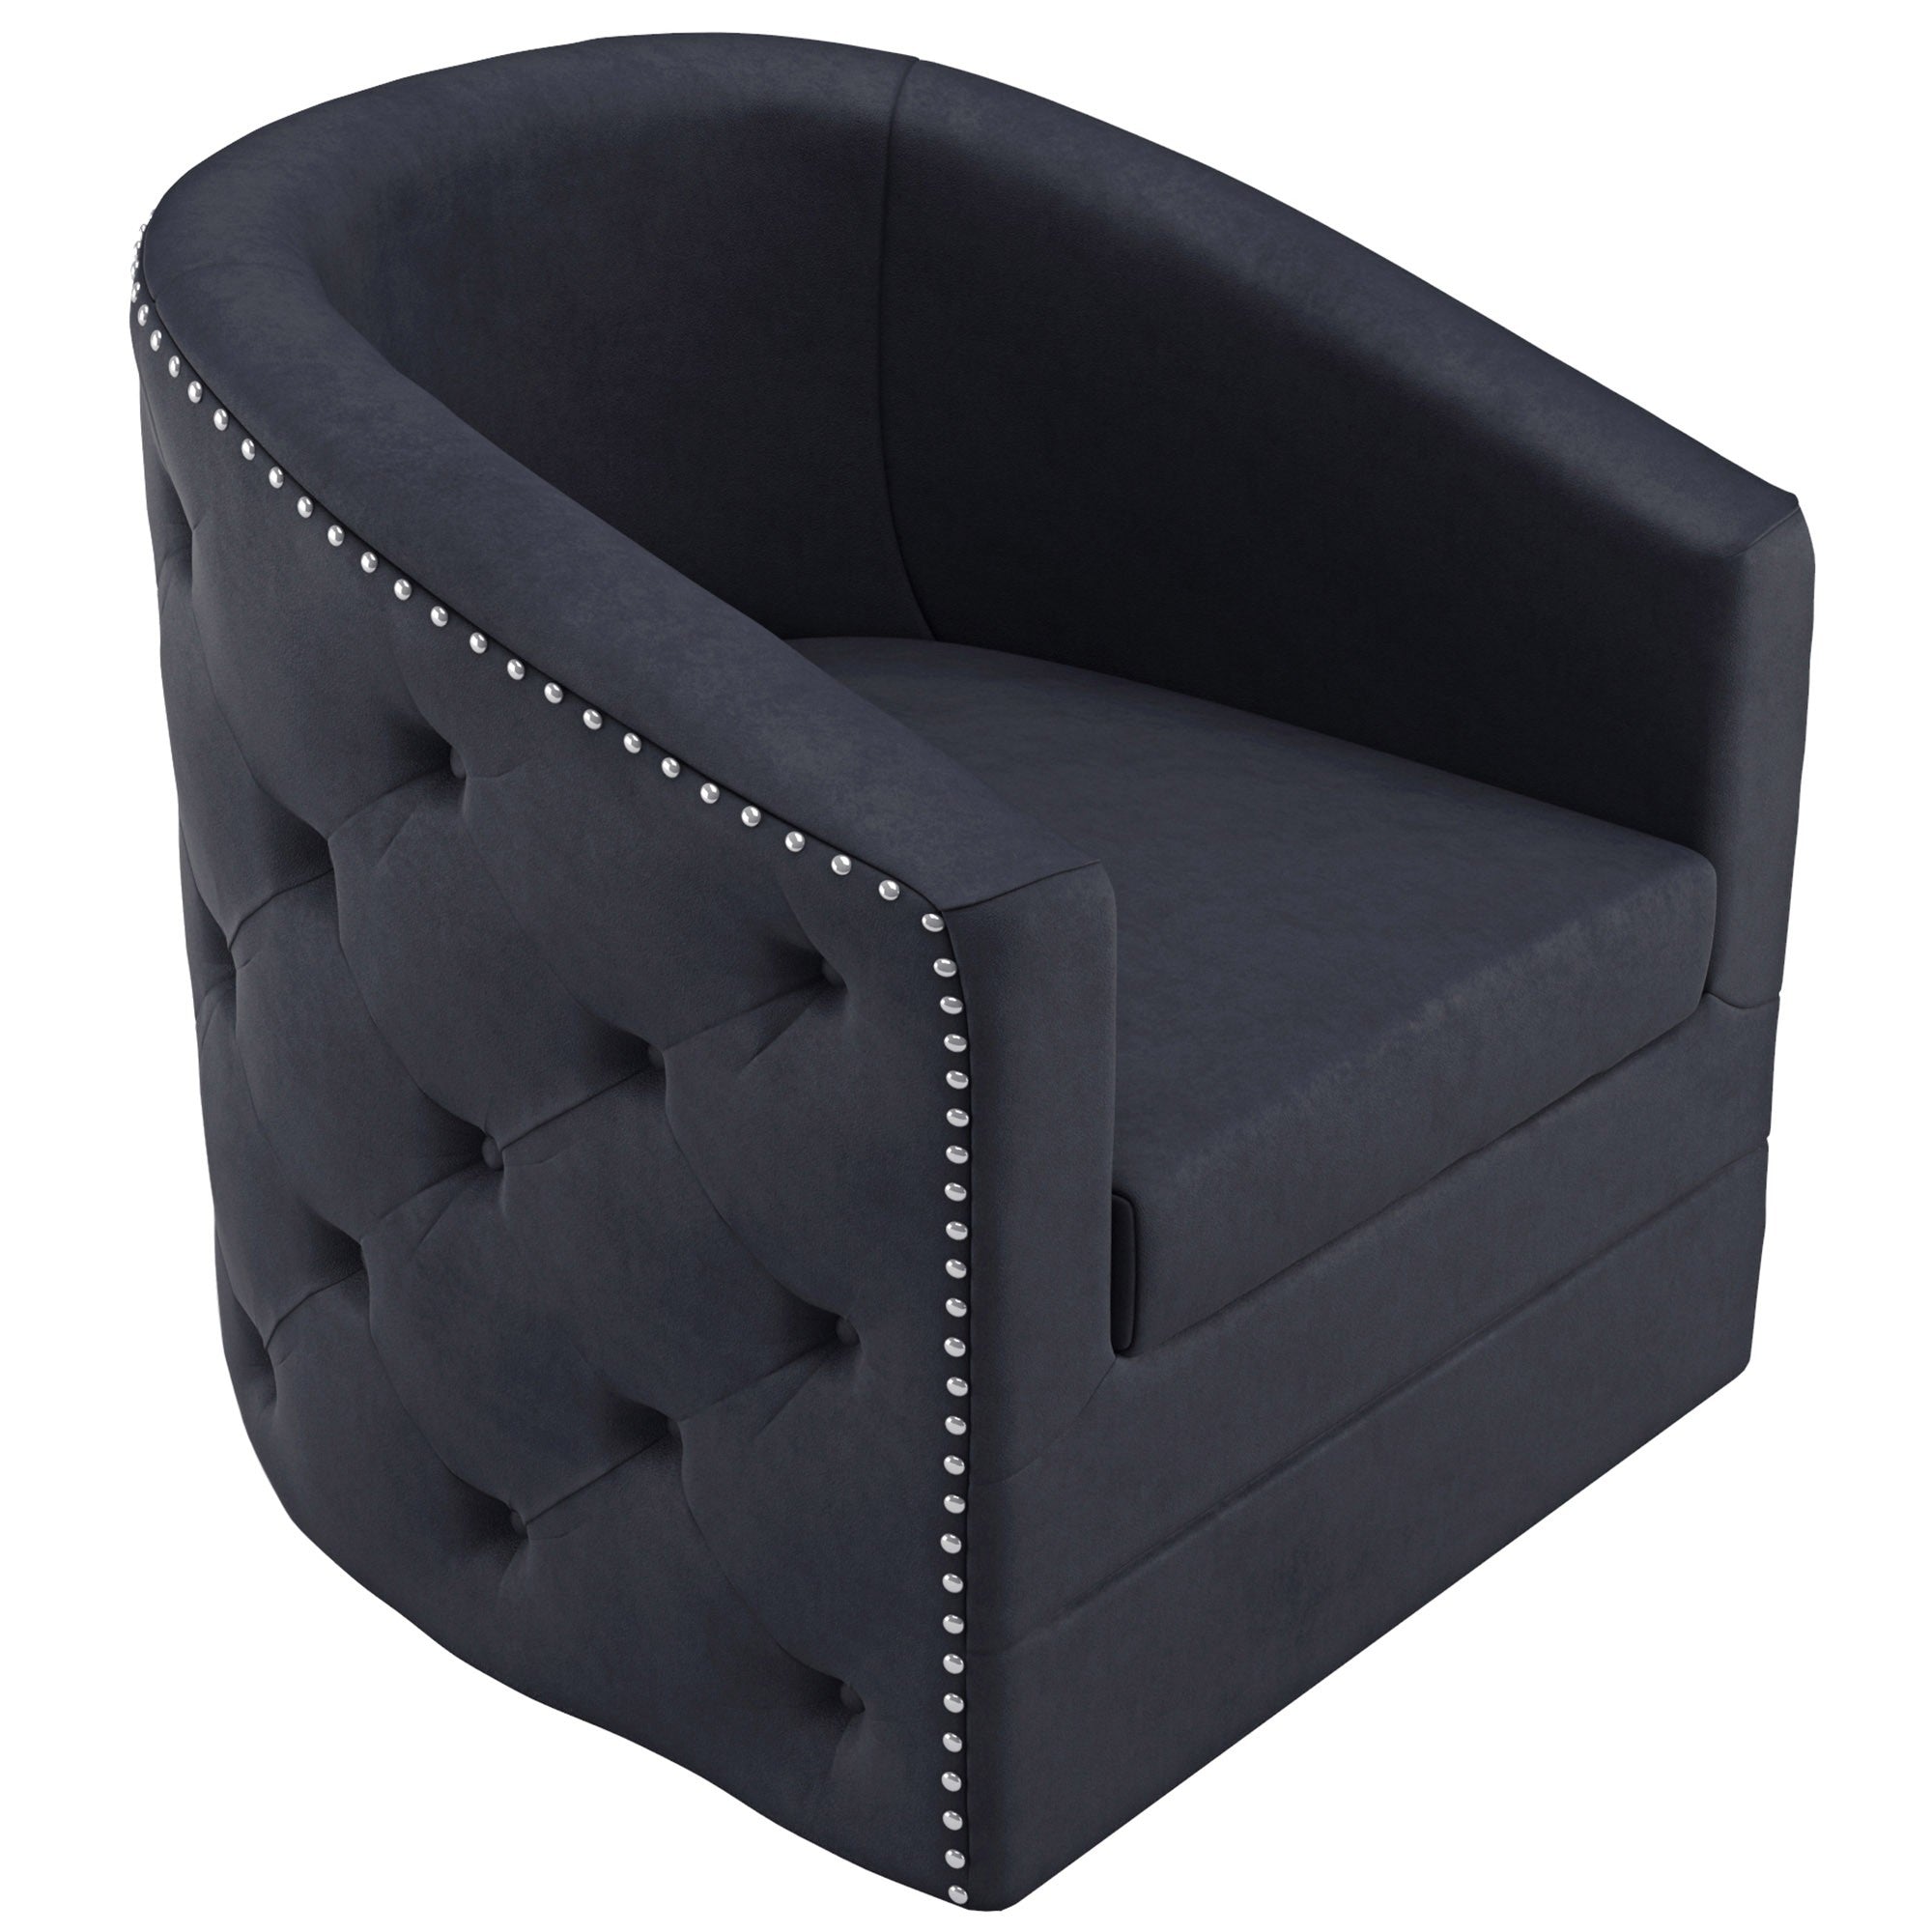 Velci Swivel Accent Chair in Black